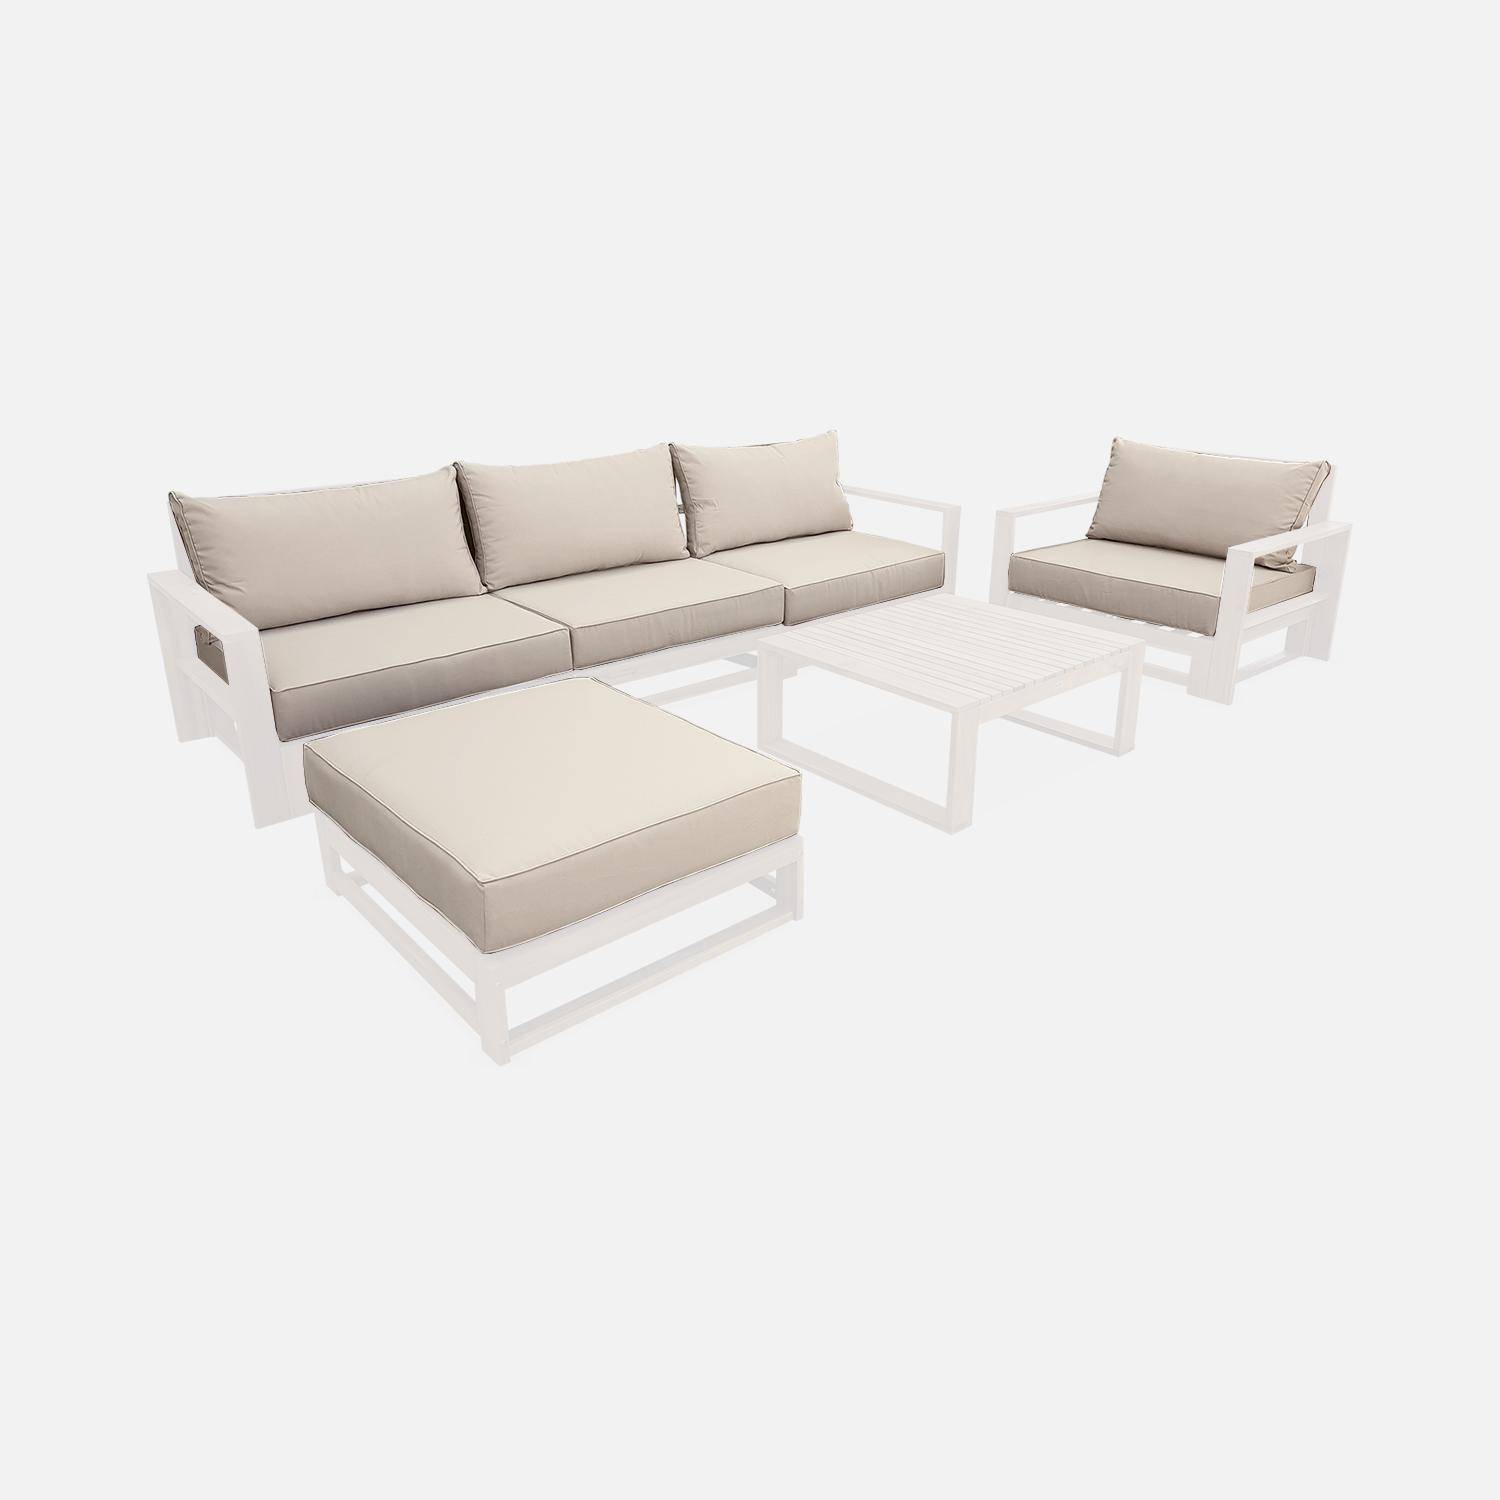 Cushion cover set for Mendoza sofa set - beige polyester, complete set,sweeek,Photo1